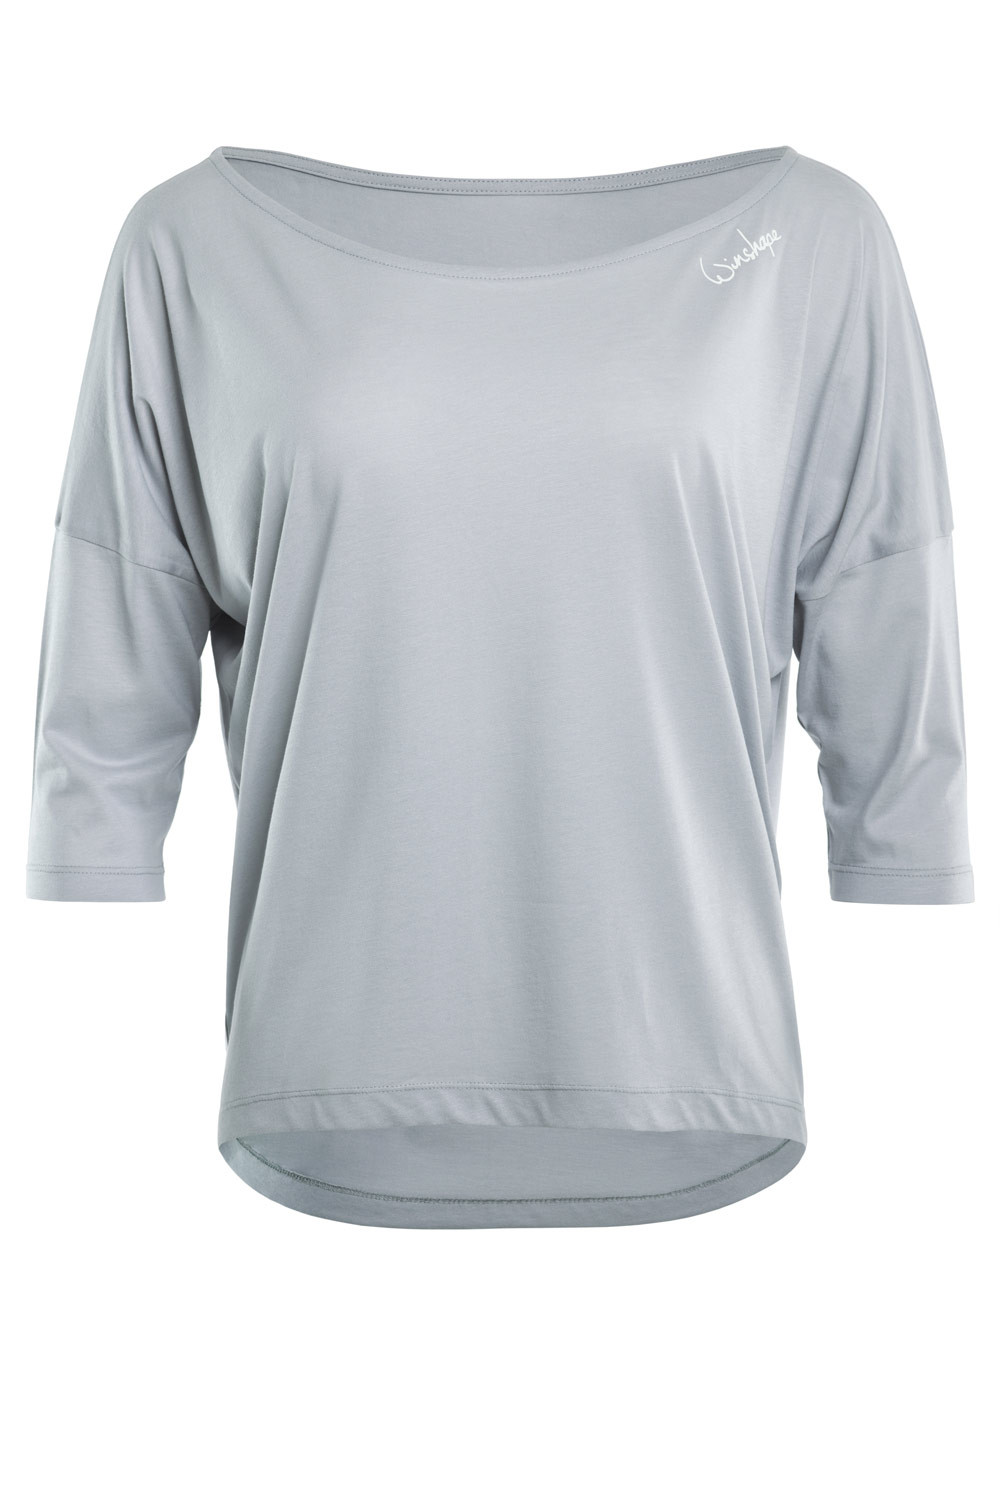 Winshape grey, cool Dance Modal-3/4-Arm Style Shirt MCS001, Ultra leichtes